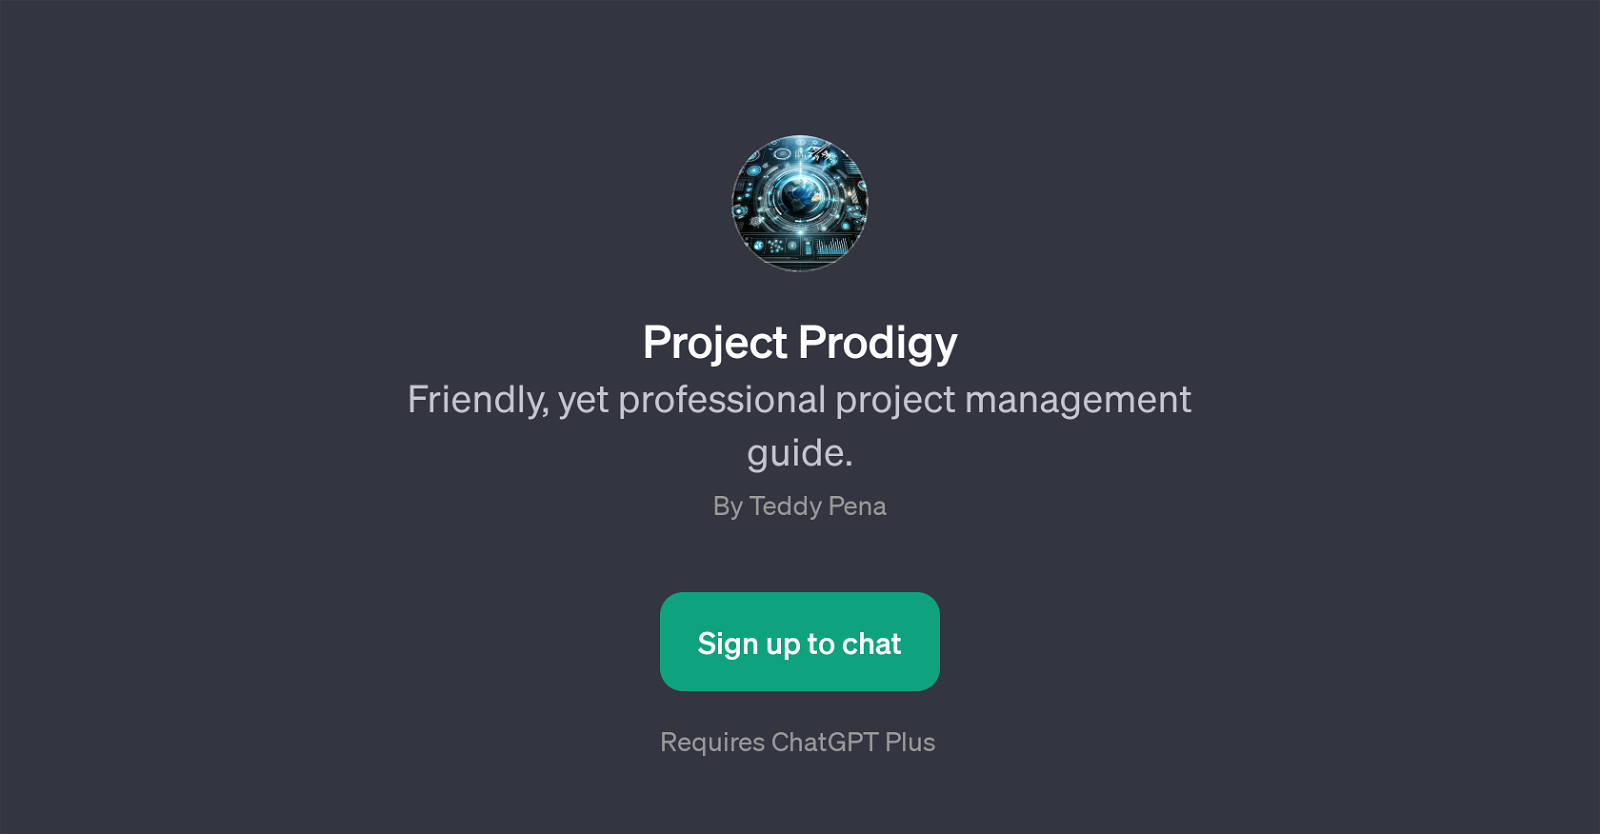 Project Prodigy website